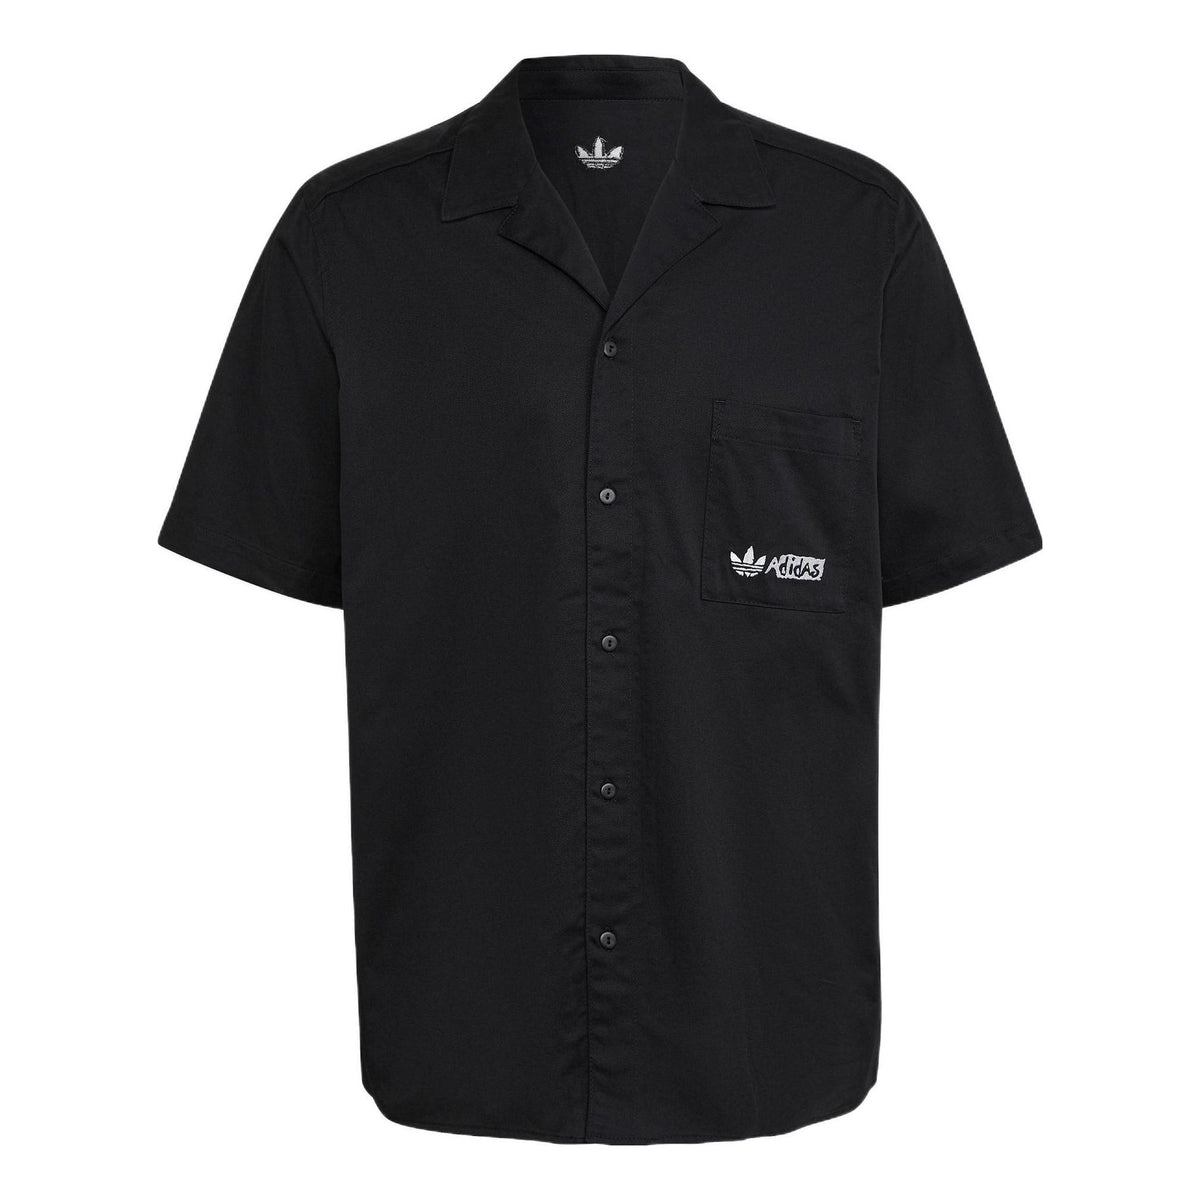 adidas originals Solid Color Logo Sports Short Sleeve Shirt Black HT16